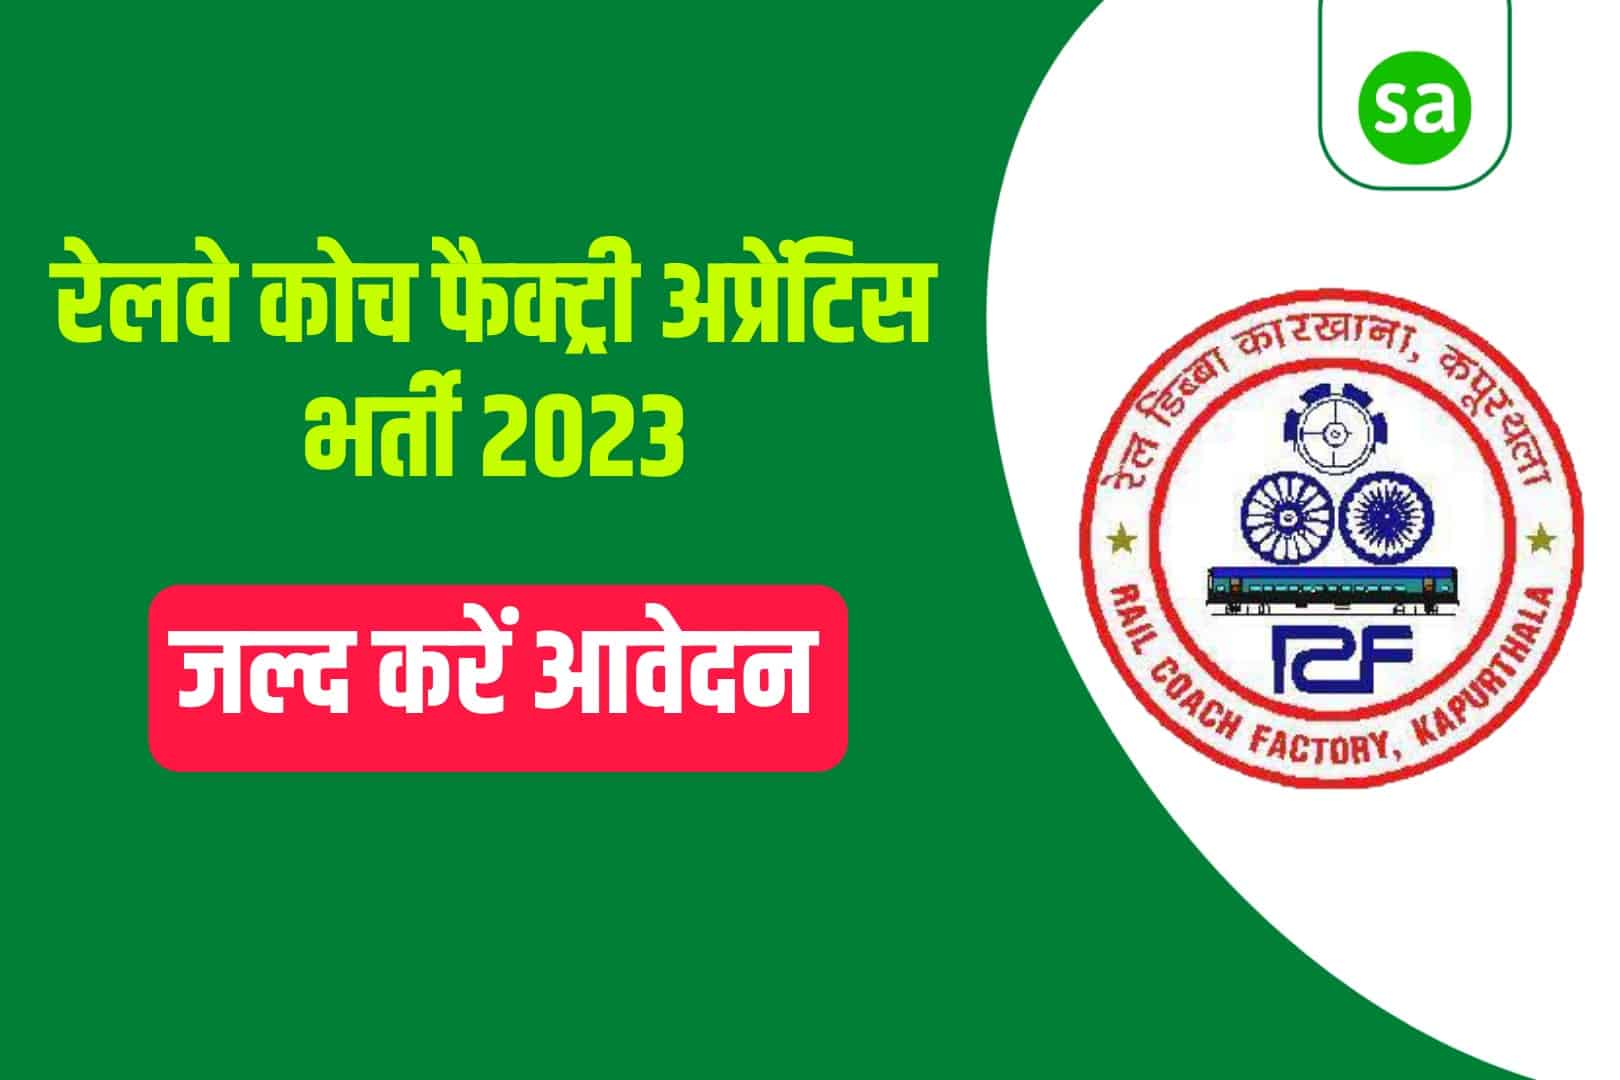 Railway Coach Factory Apprentice Recruitment 2023 Online Form | रेलवे कोच फैक्ट्री अप्रेंटिस भर्ती 2023